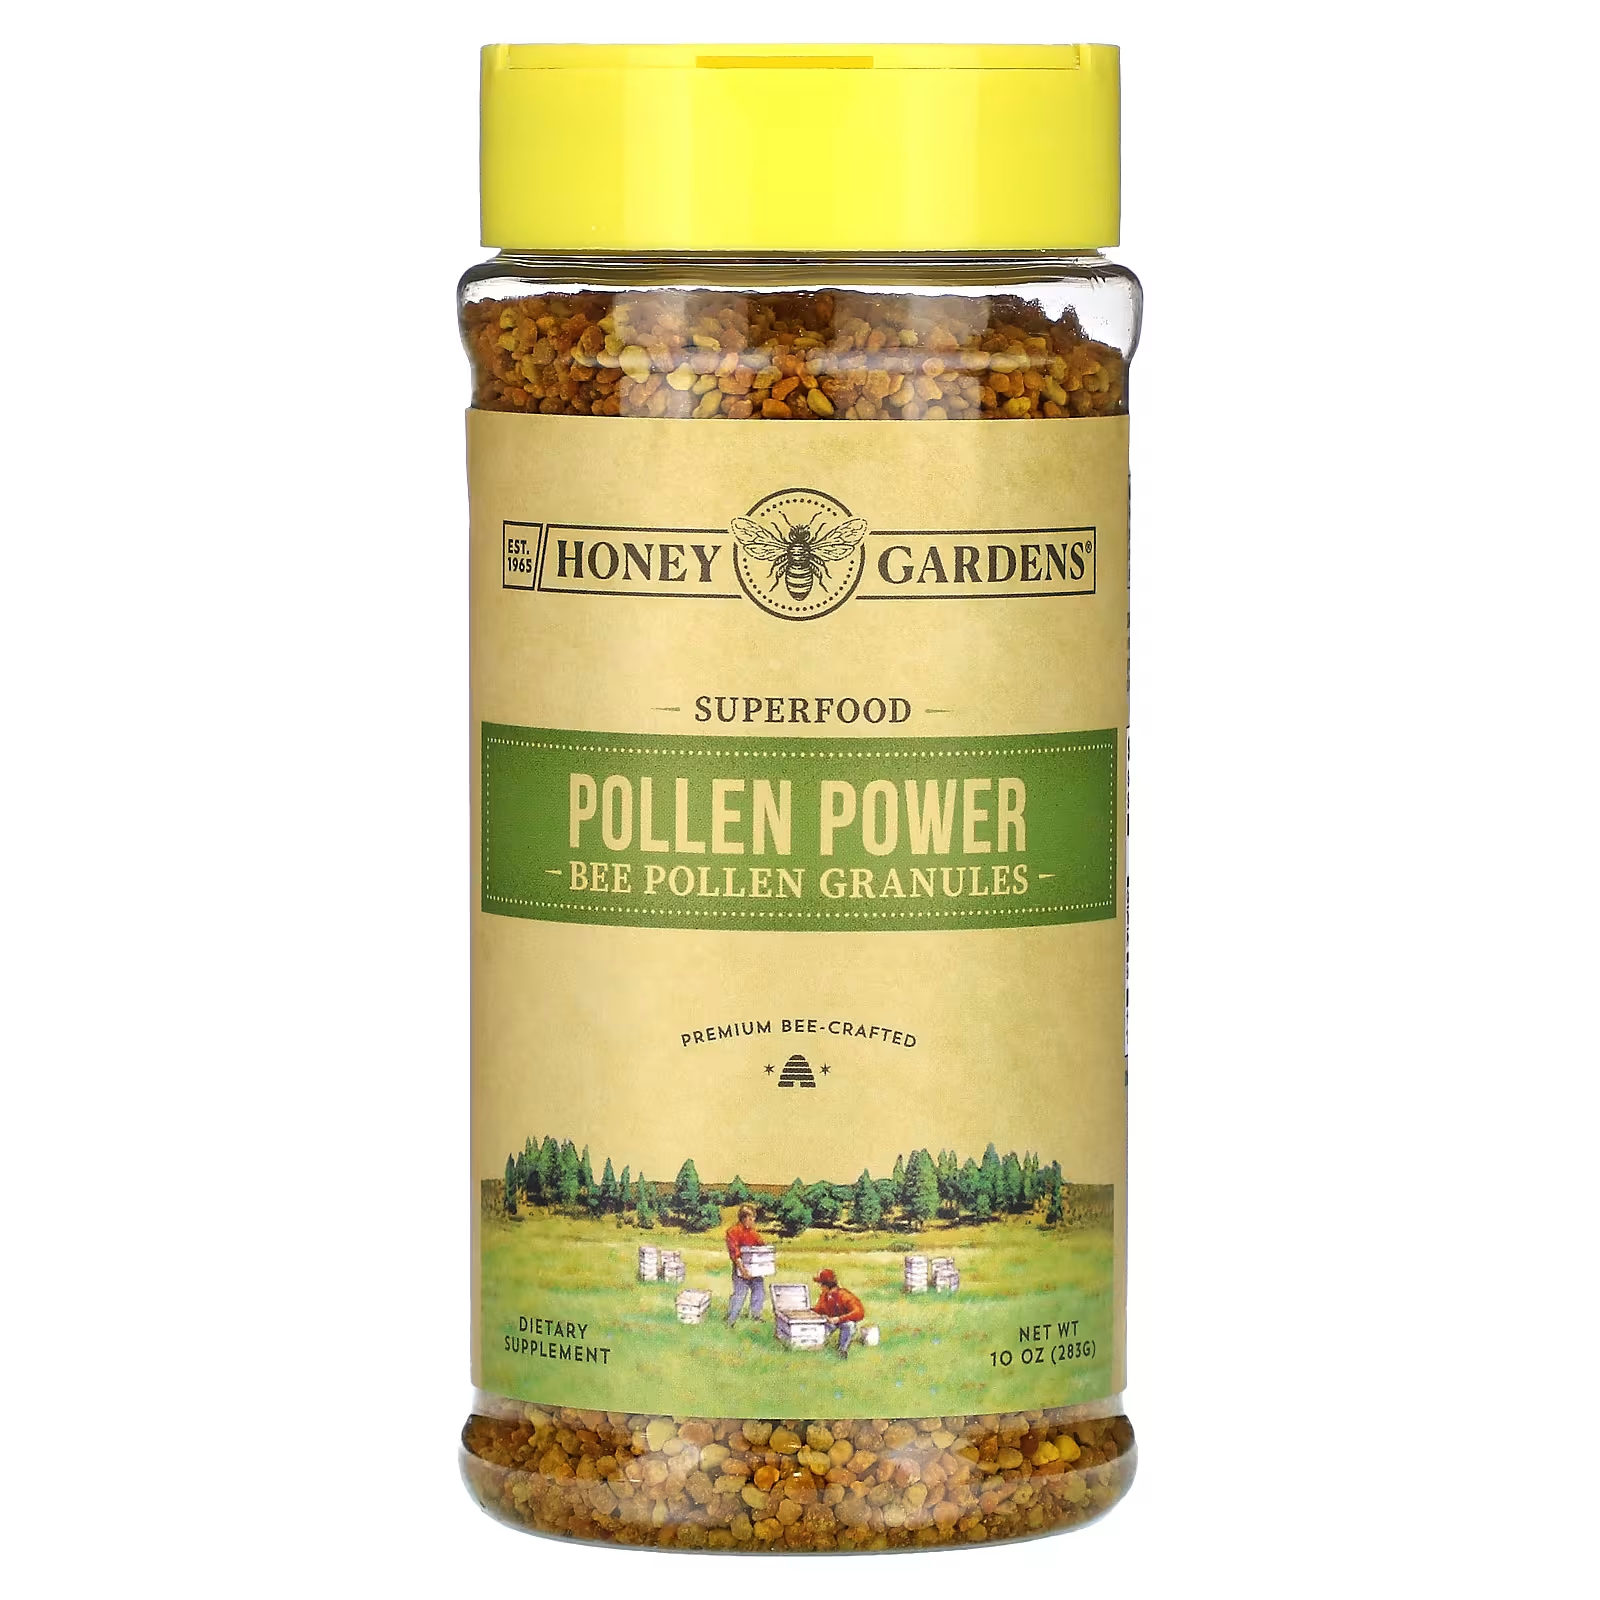 Гранулы пчелиной пыльцы Honey Gardens Pollen Power, 283 г гранулы пчелиной пыльцы honey gardens pollen power 10 унций 283 г